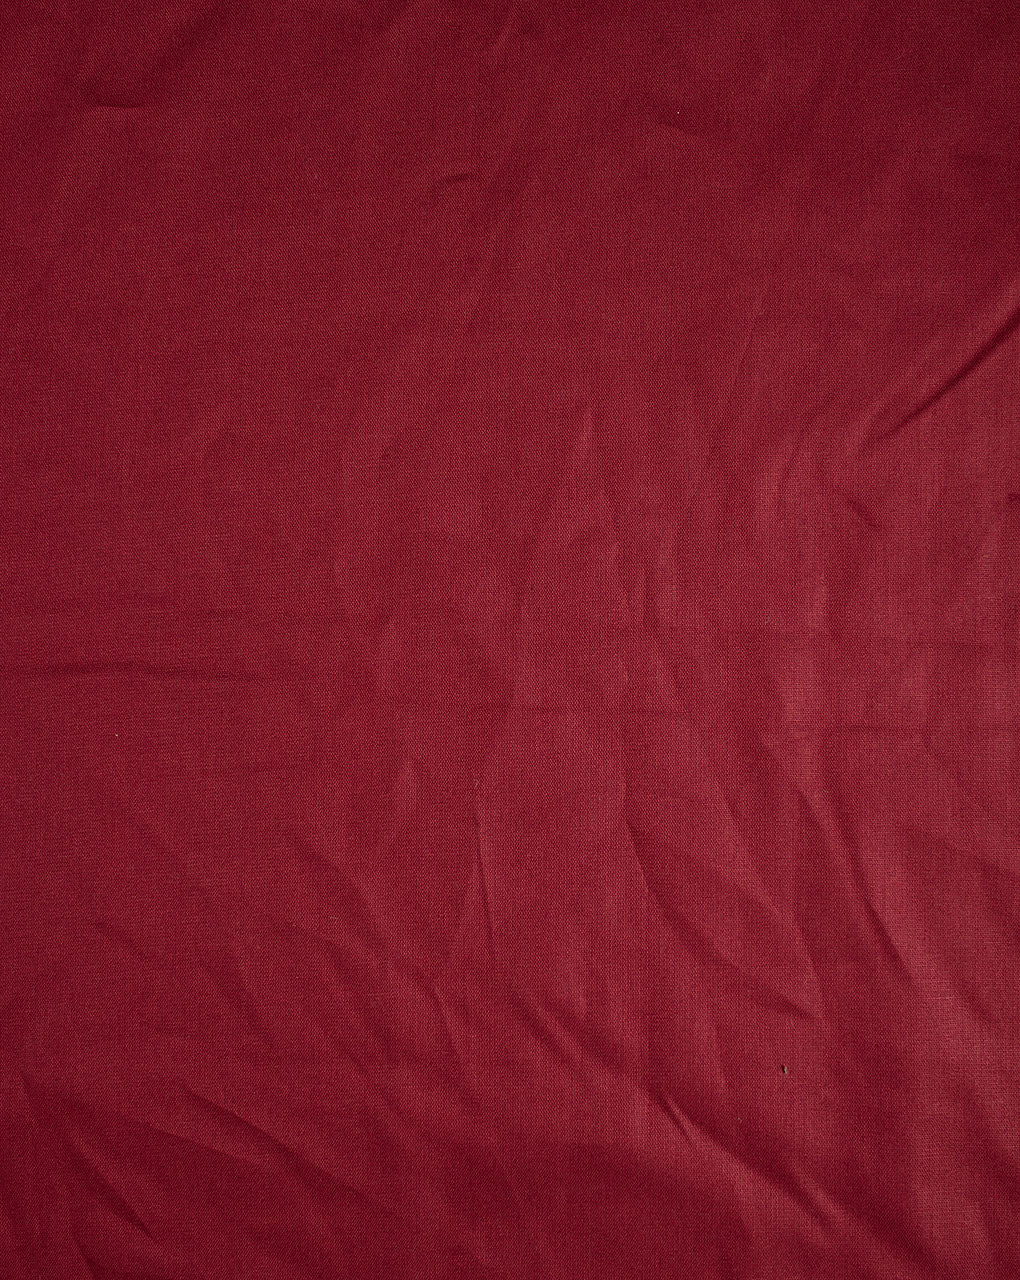 Maroon Plain Rayon Fabric